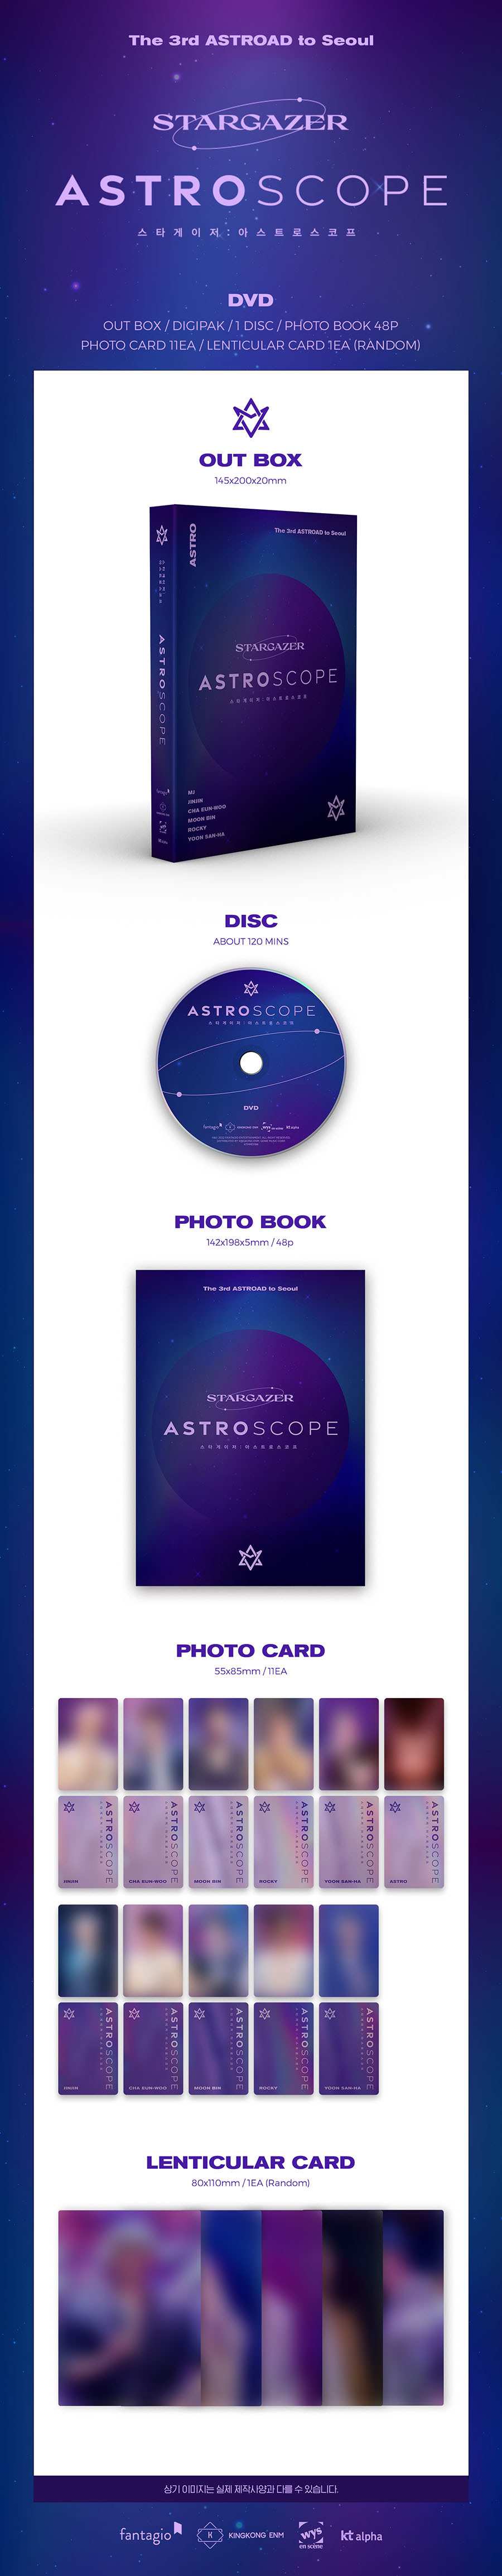 ASTRO - The 3rd ASTROAD to Seoul STARGAZER [Blu-Ray] - Kmall24